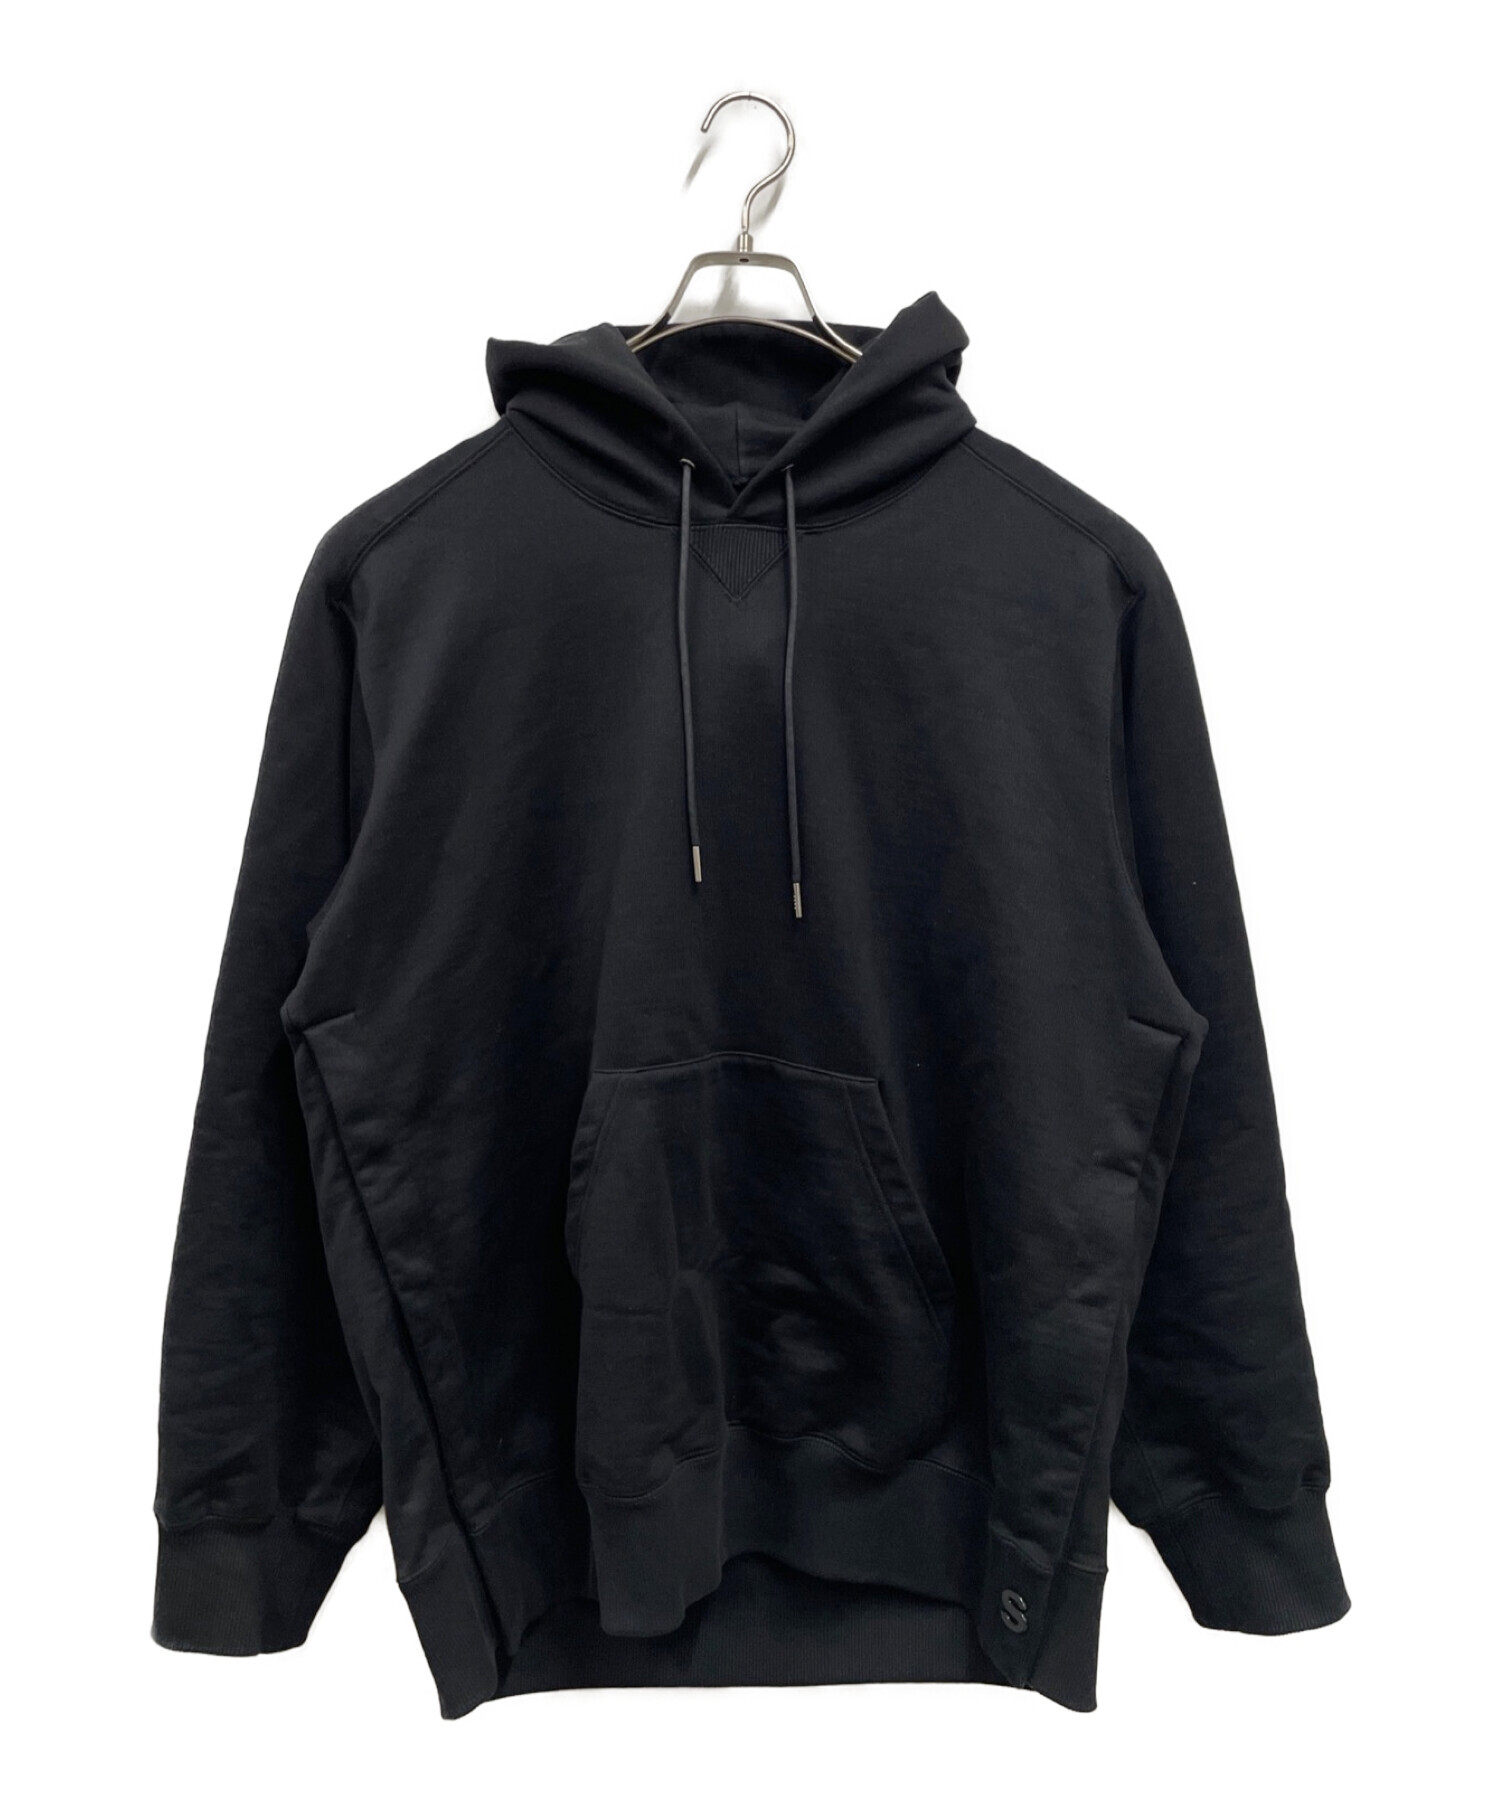 Sacai hoodie black size 3Sacaionline購入